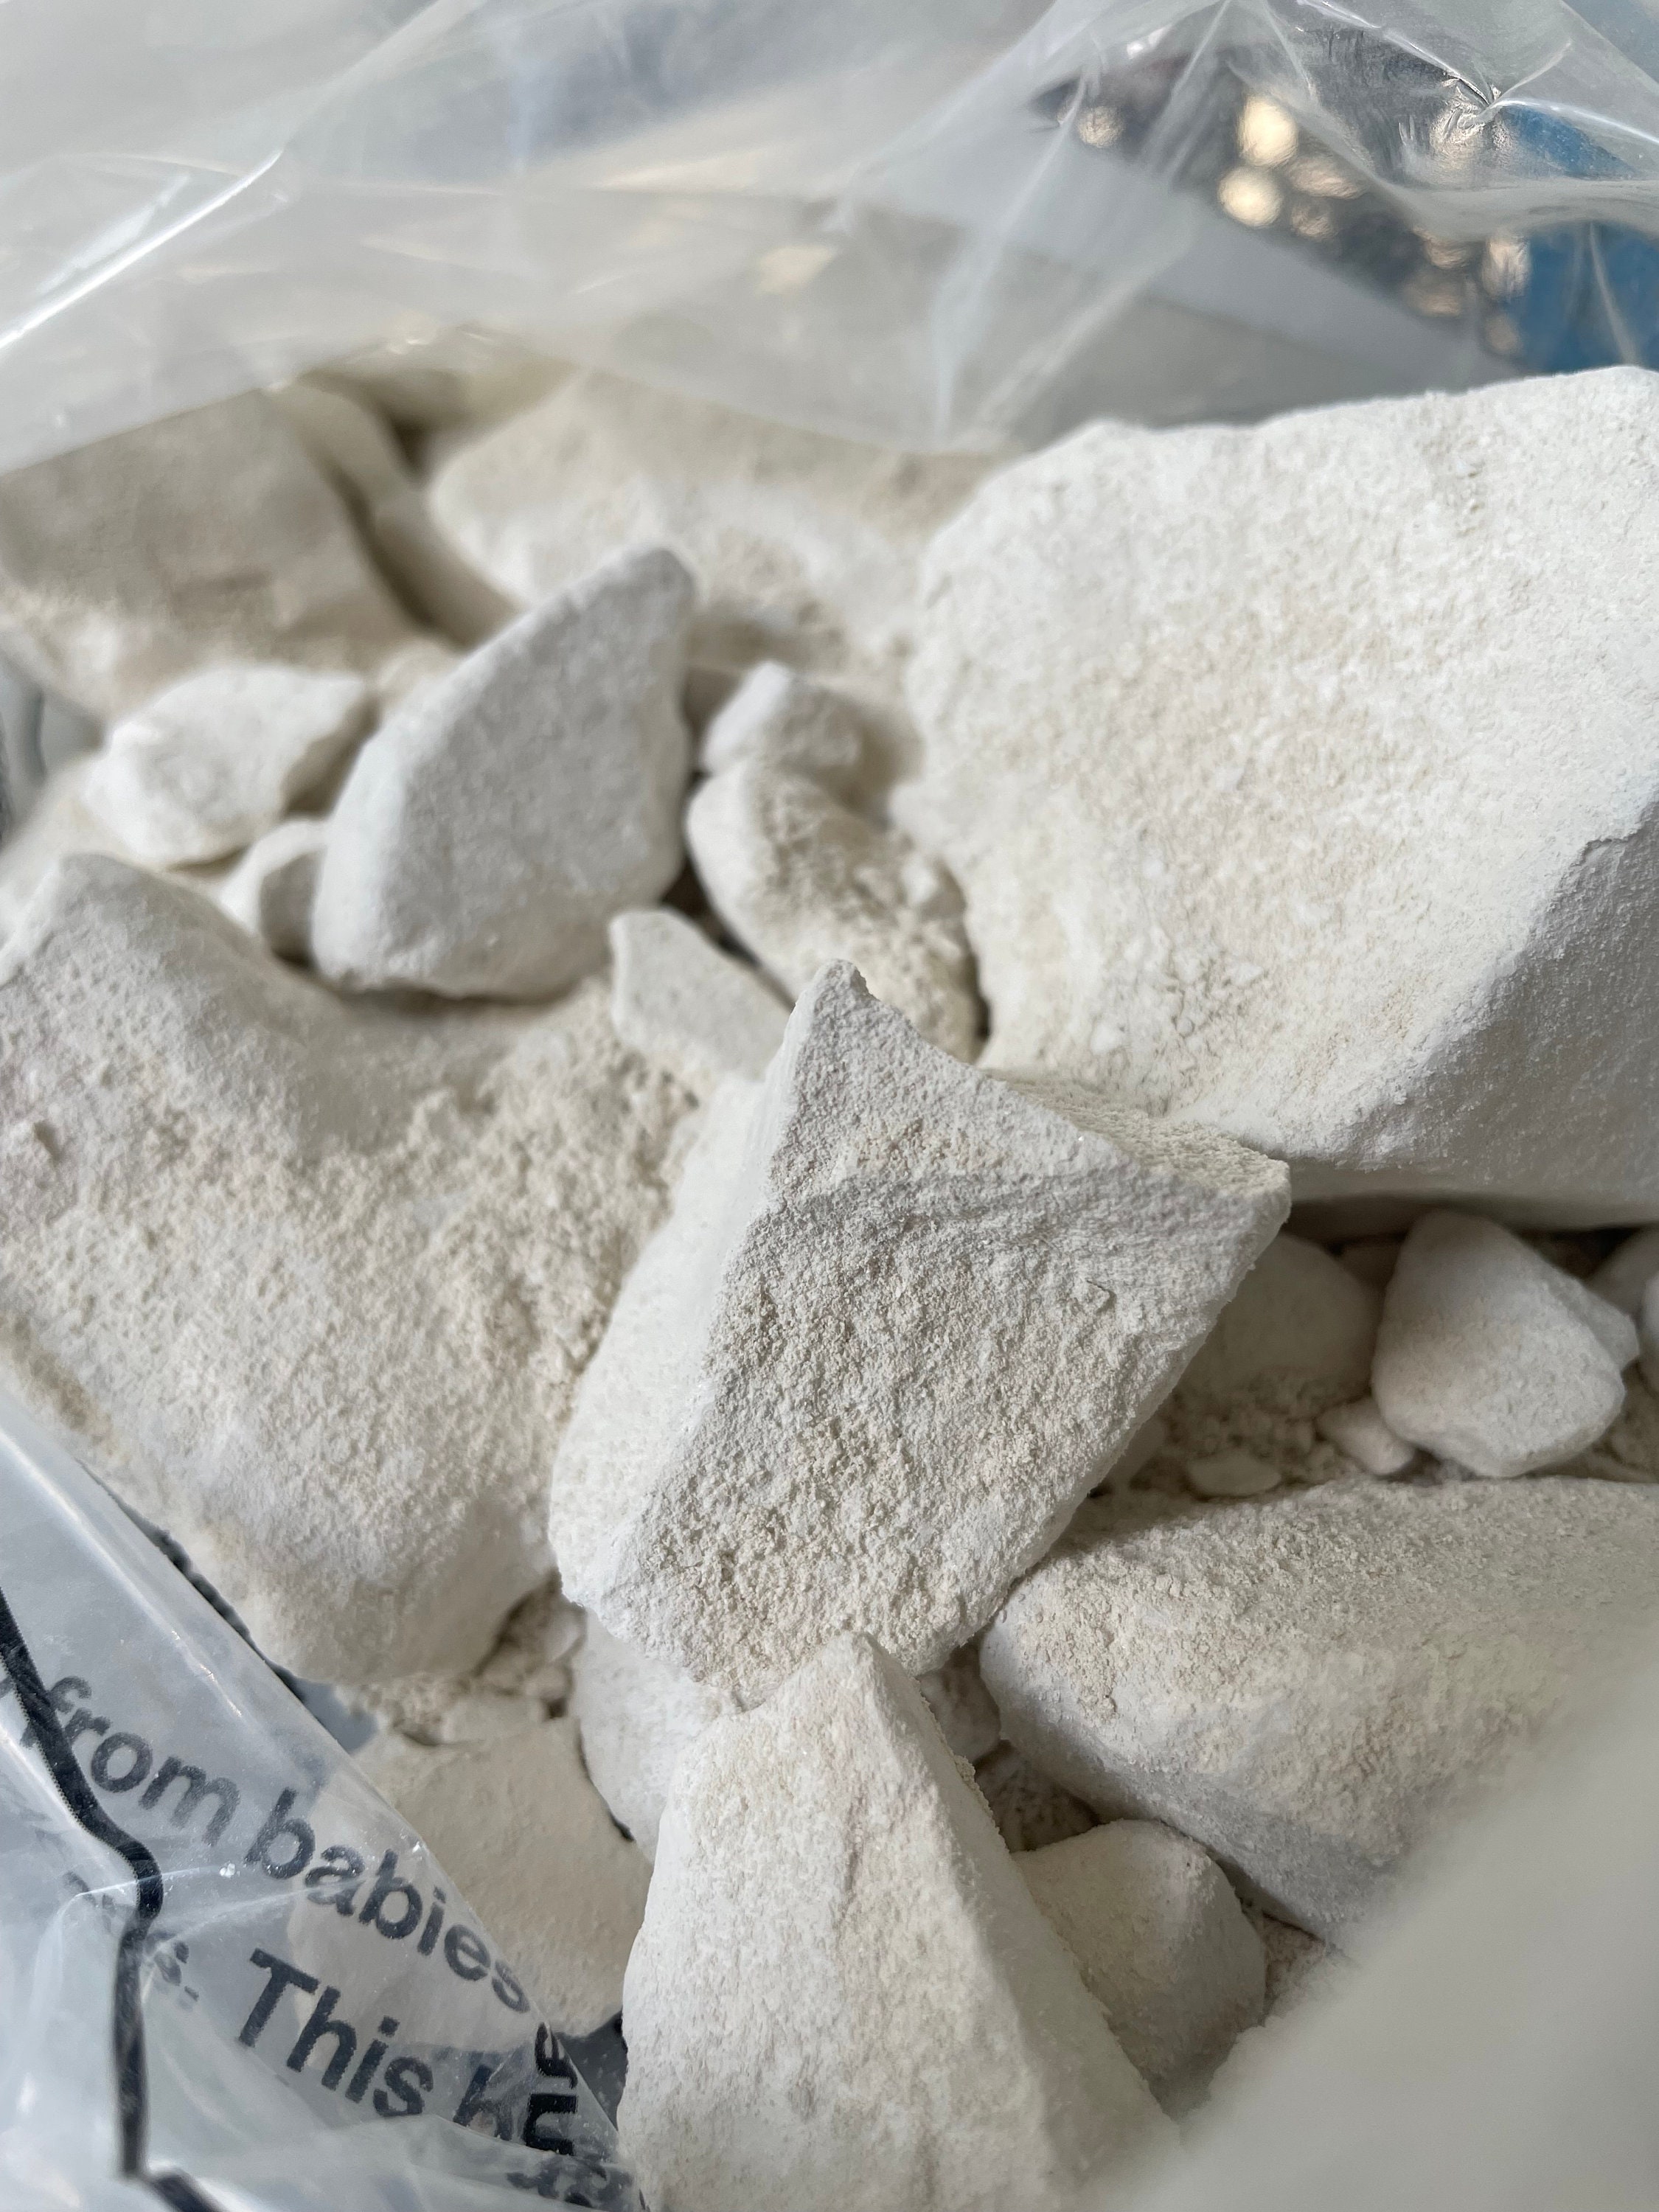 USA Kaolin Clay Chunks & Pieces White Dirt 1 Pound All Sizes 